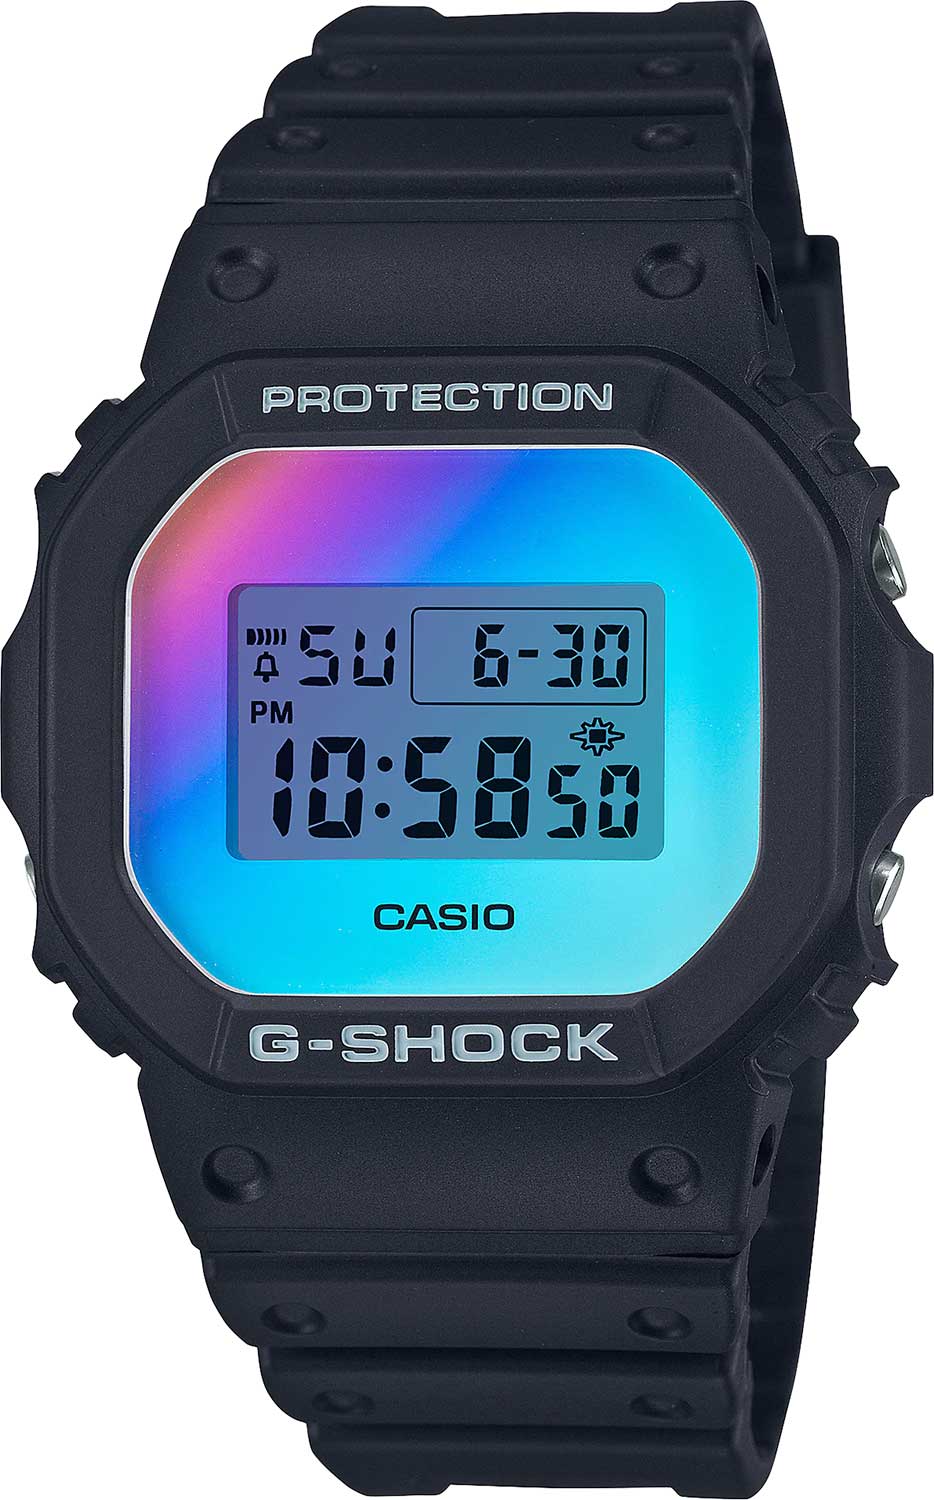    Casio G-SHOCK DW-5600SR-1  